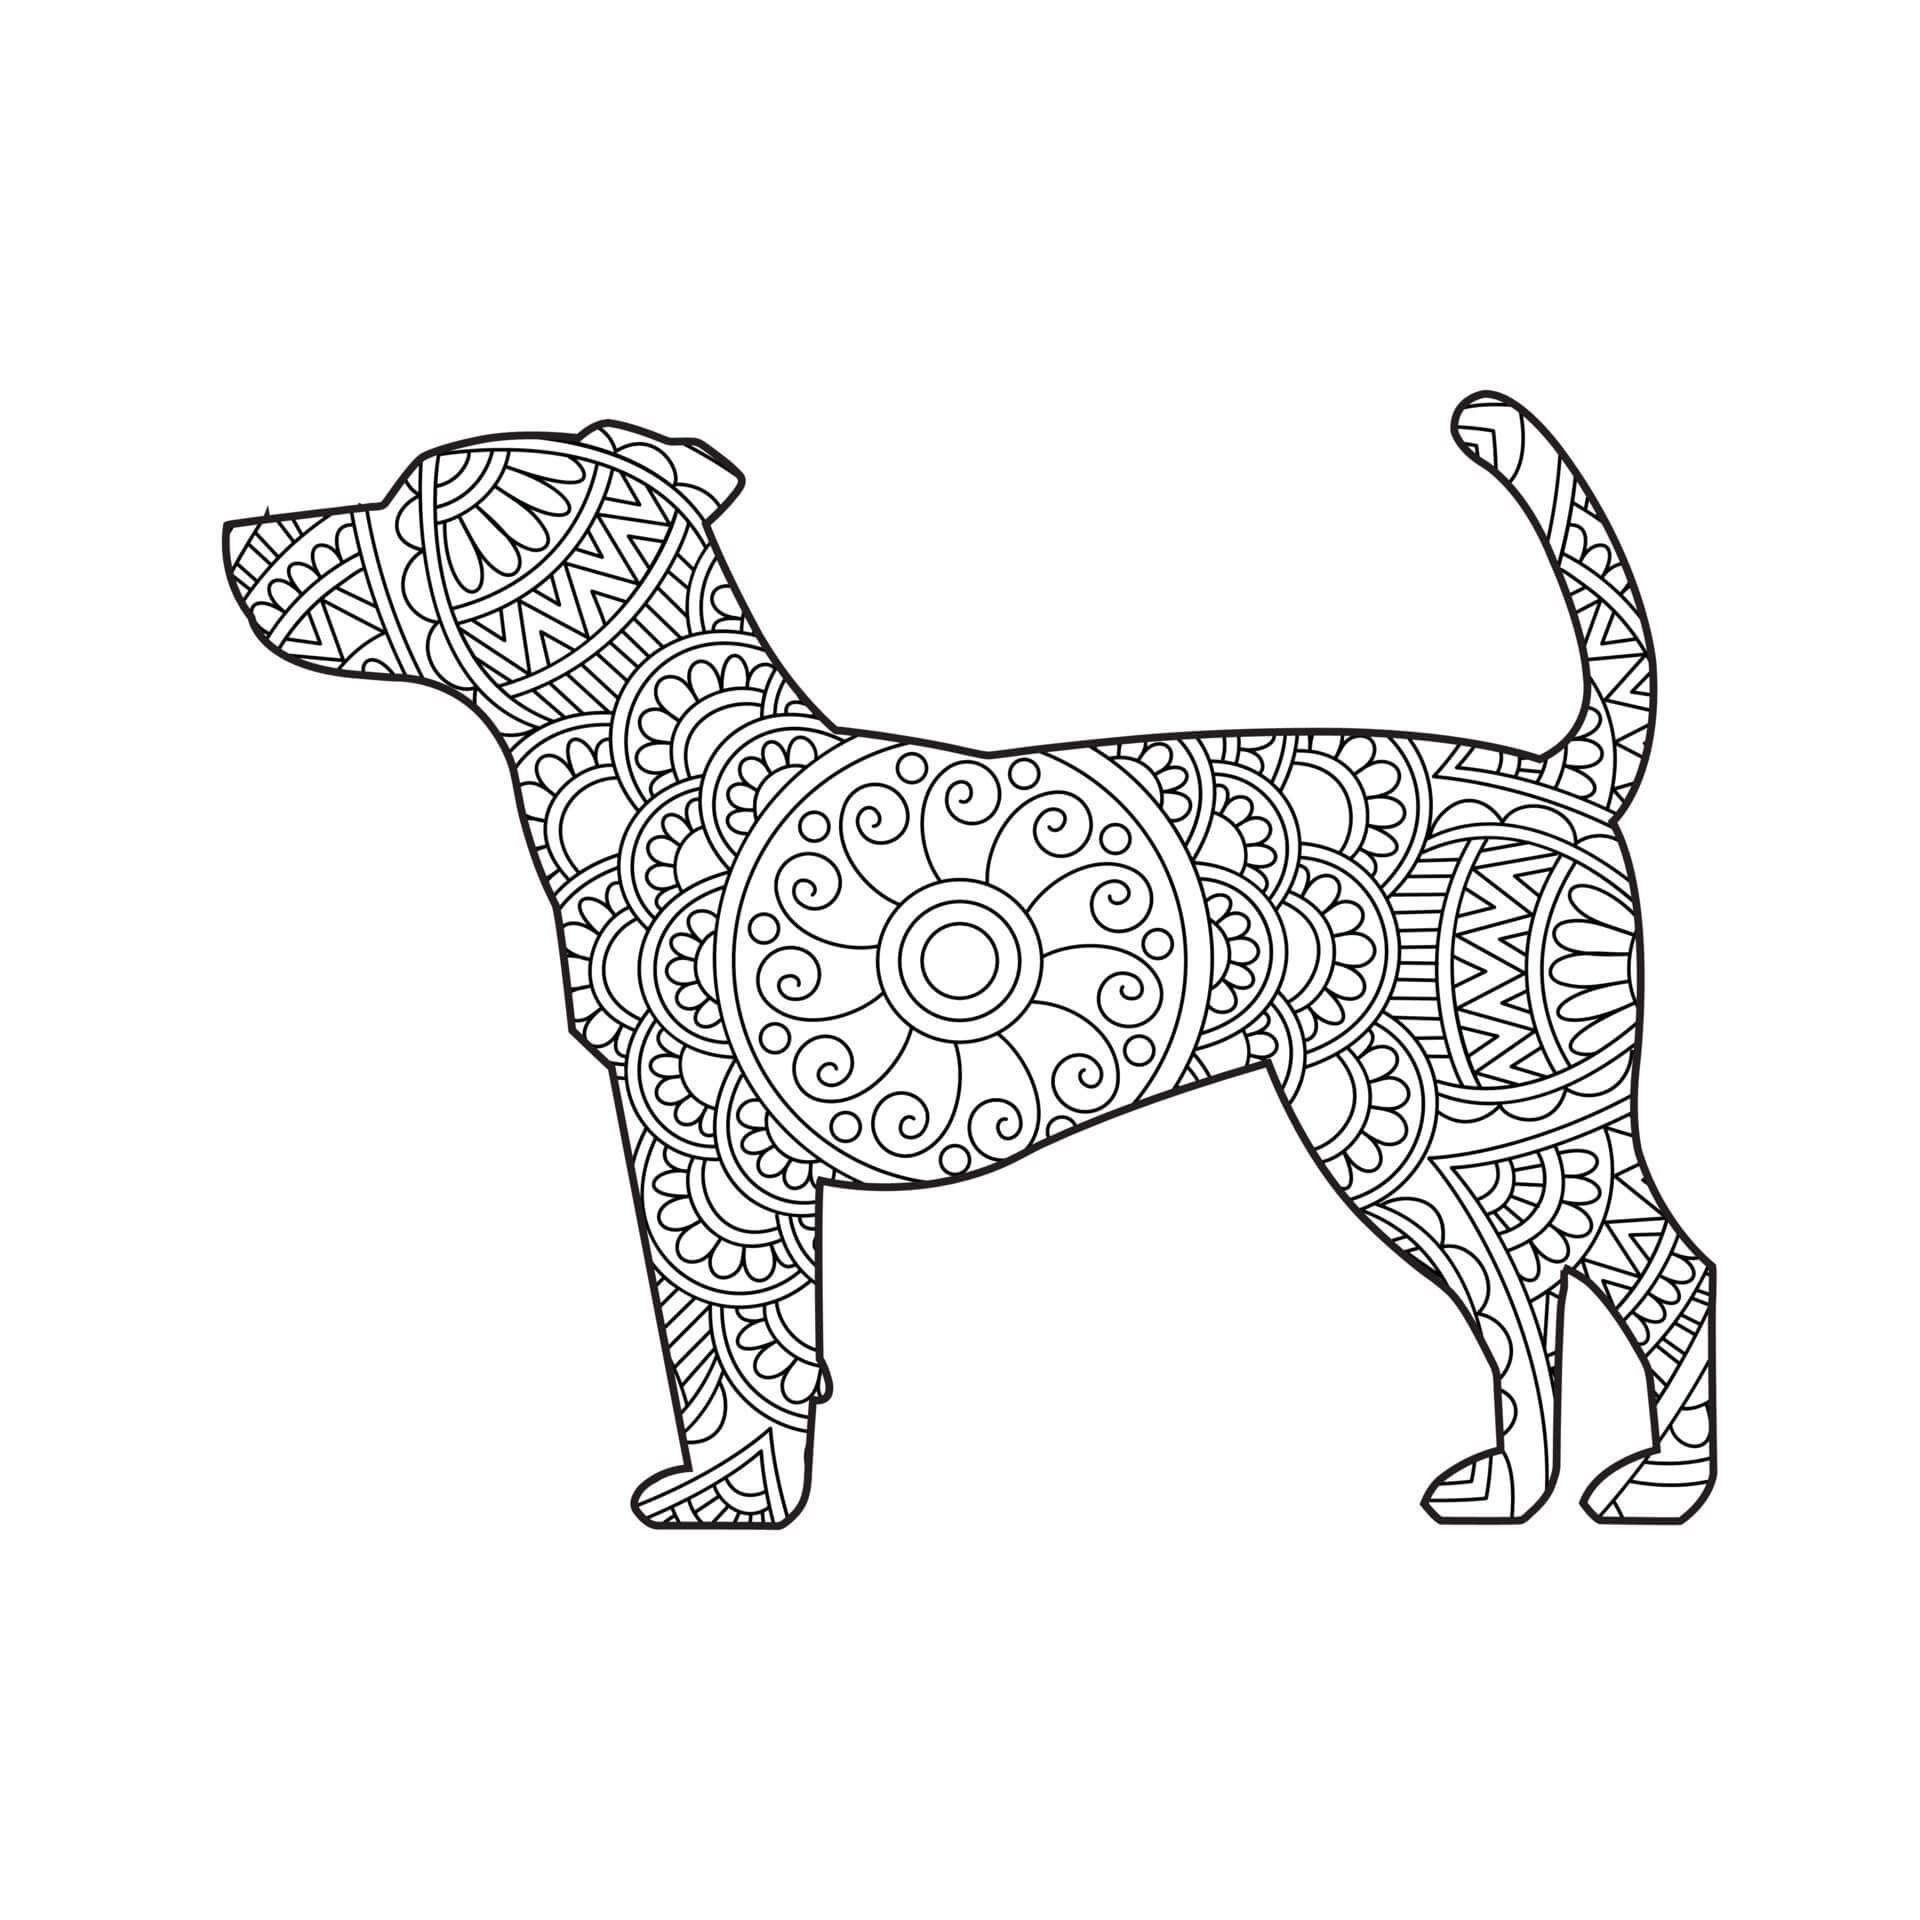 Mandala Dog Coloring Page – Sheet 4 Mandala